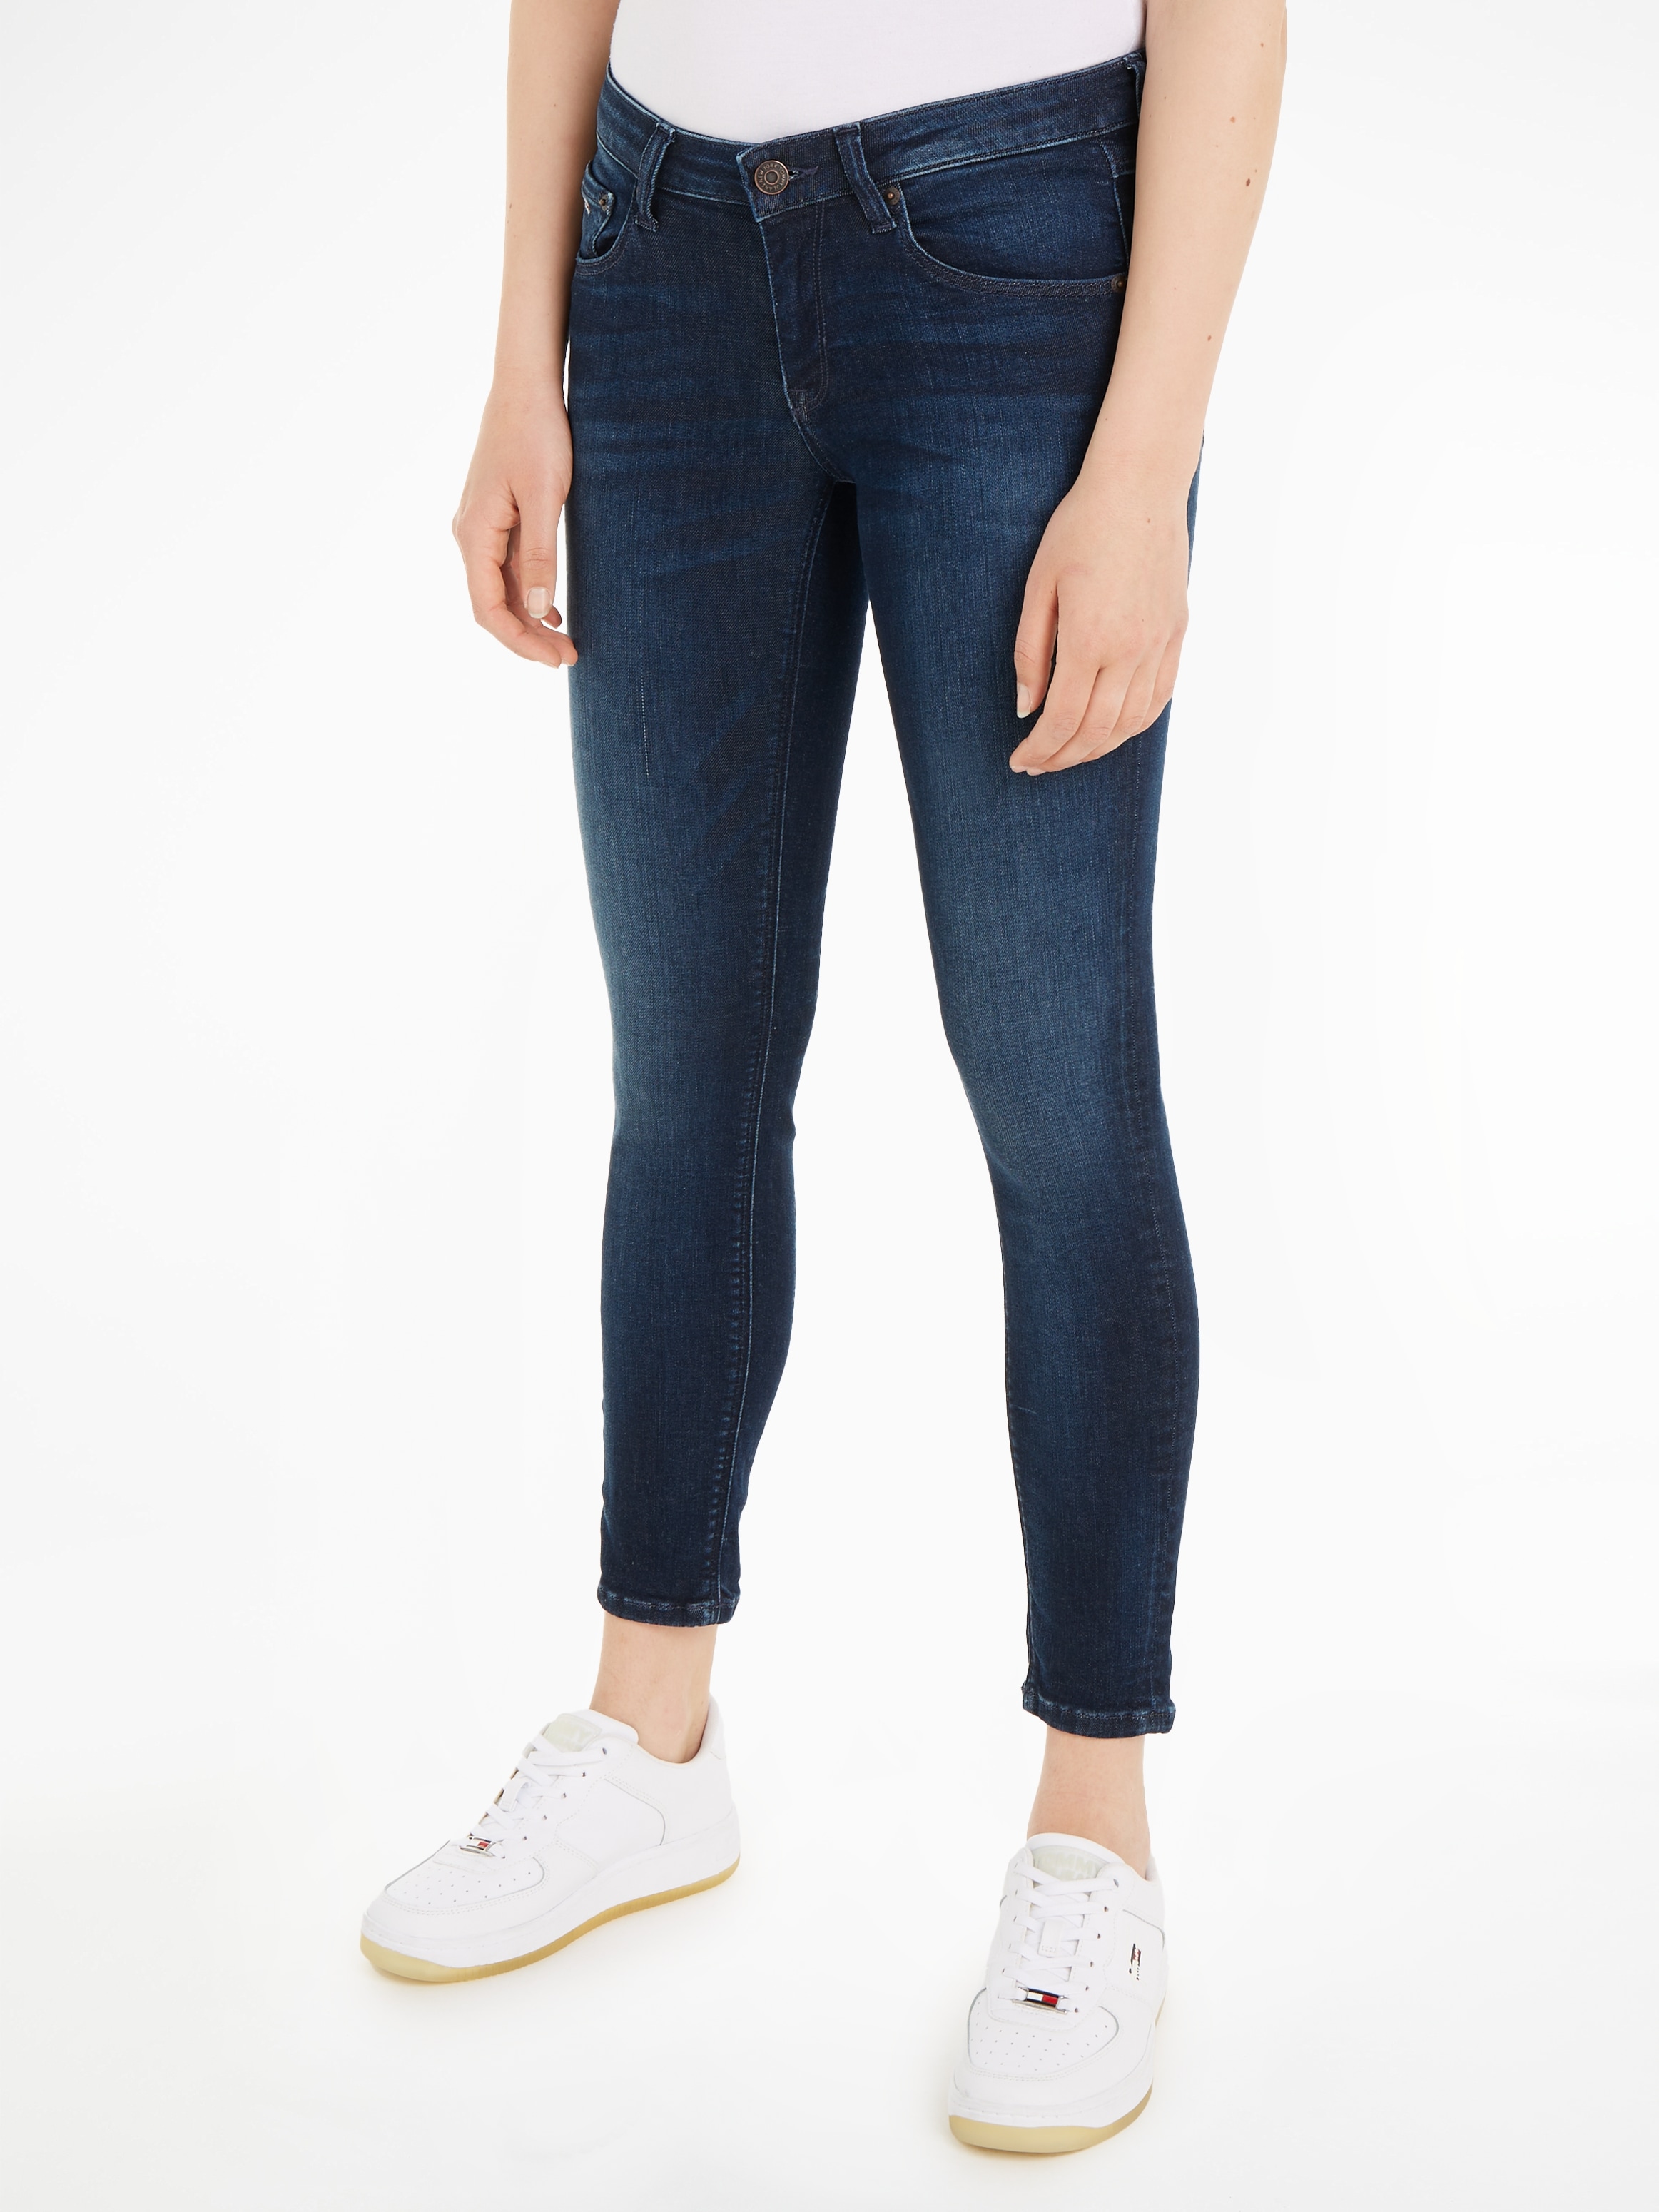 Jeans Jeans bei Bequeme Tommy OTTO mit »Scarlett«, online Ledermarkenlabel